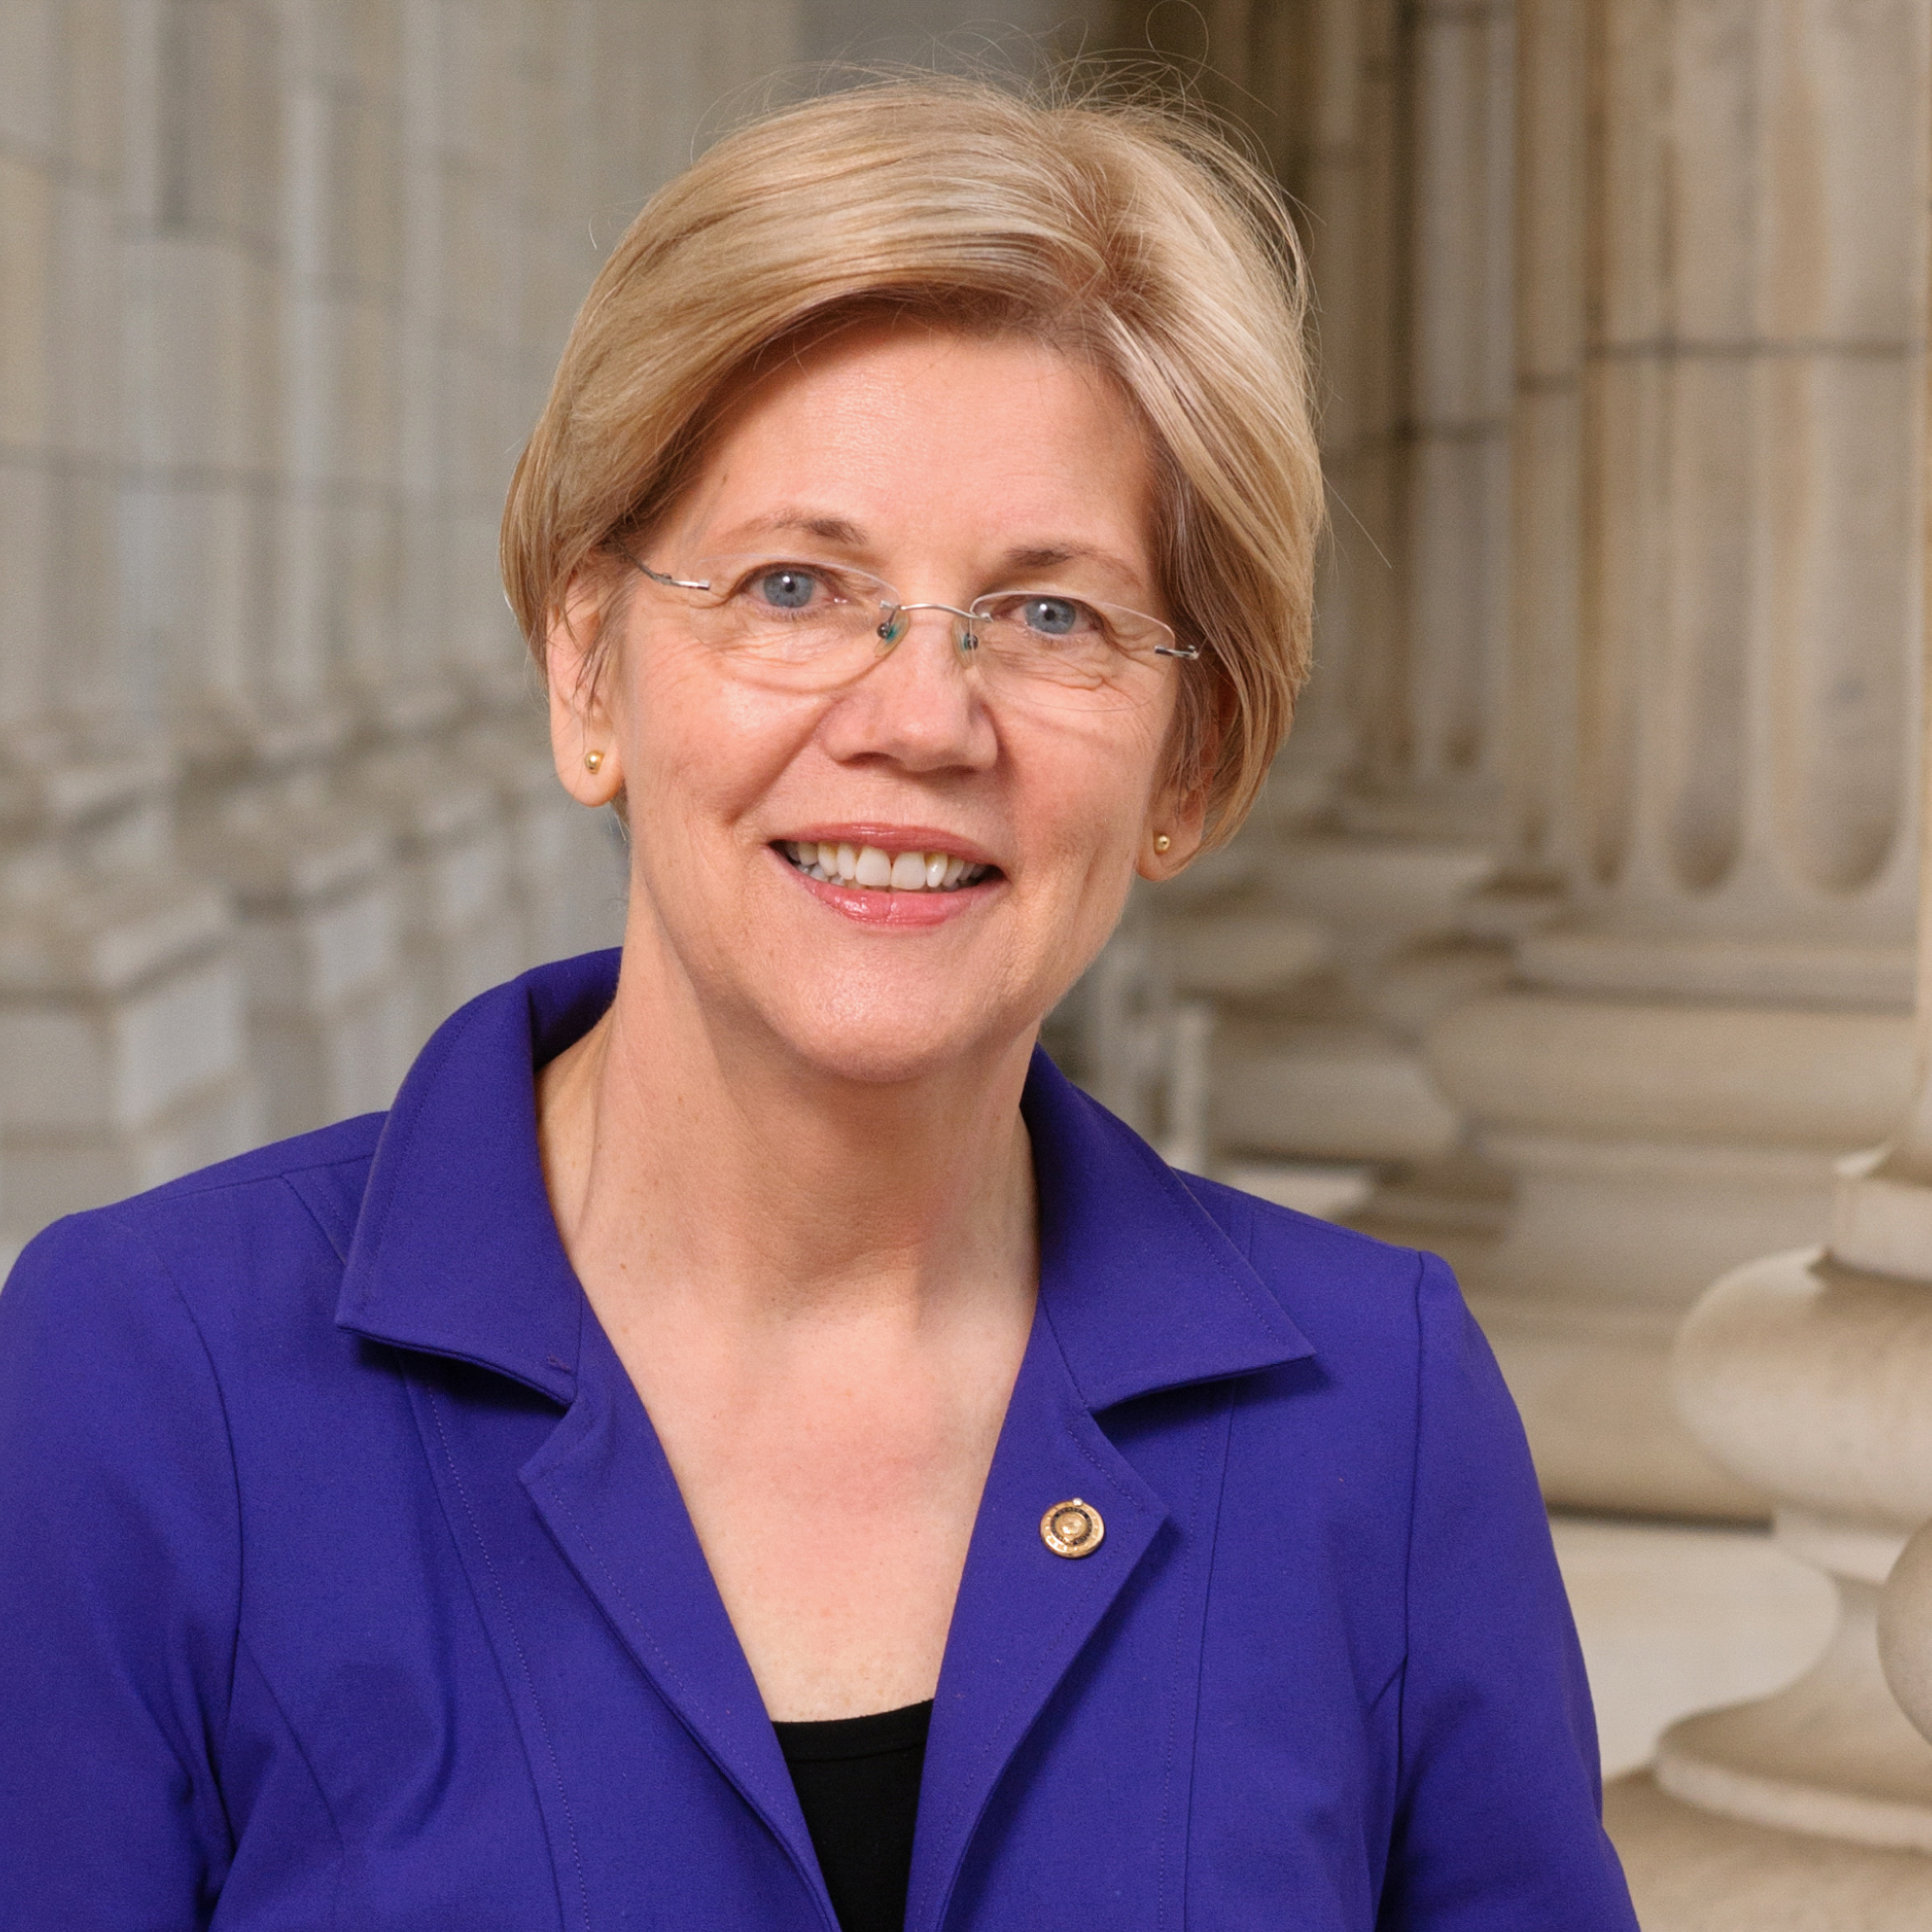 Profile picture of Elizabeth Warren